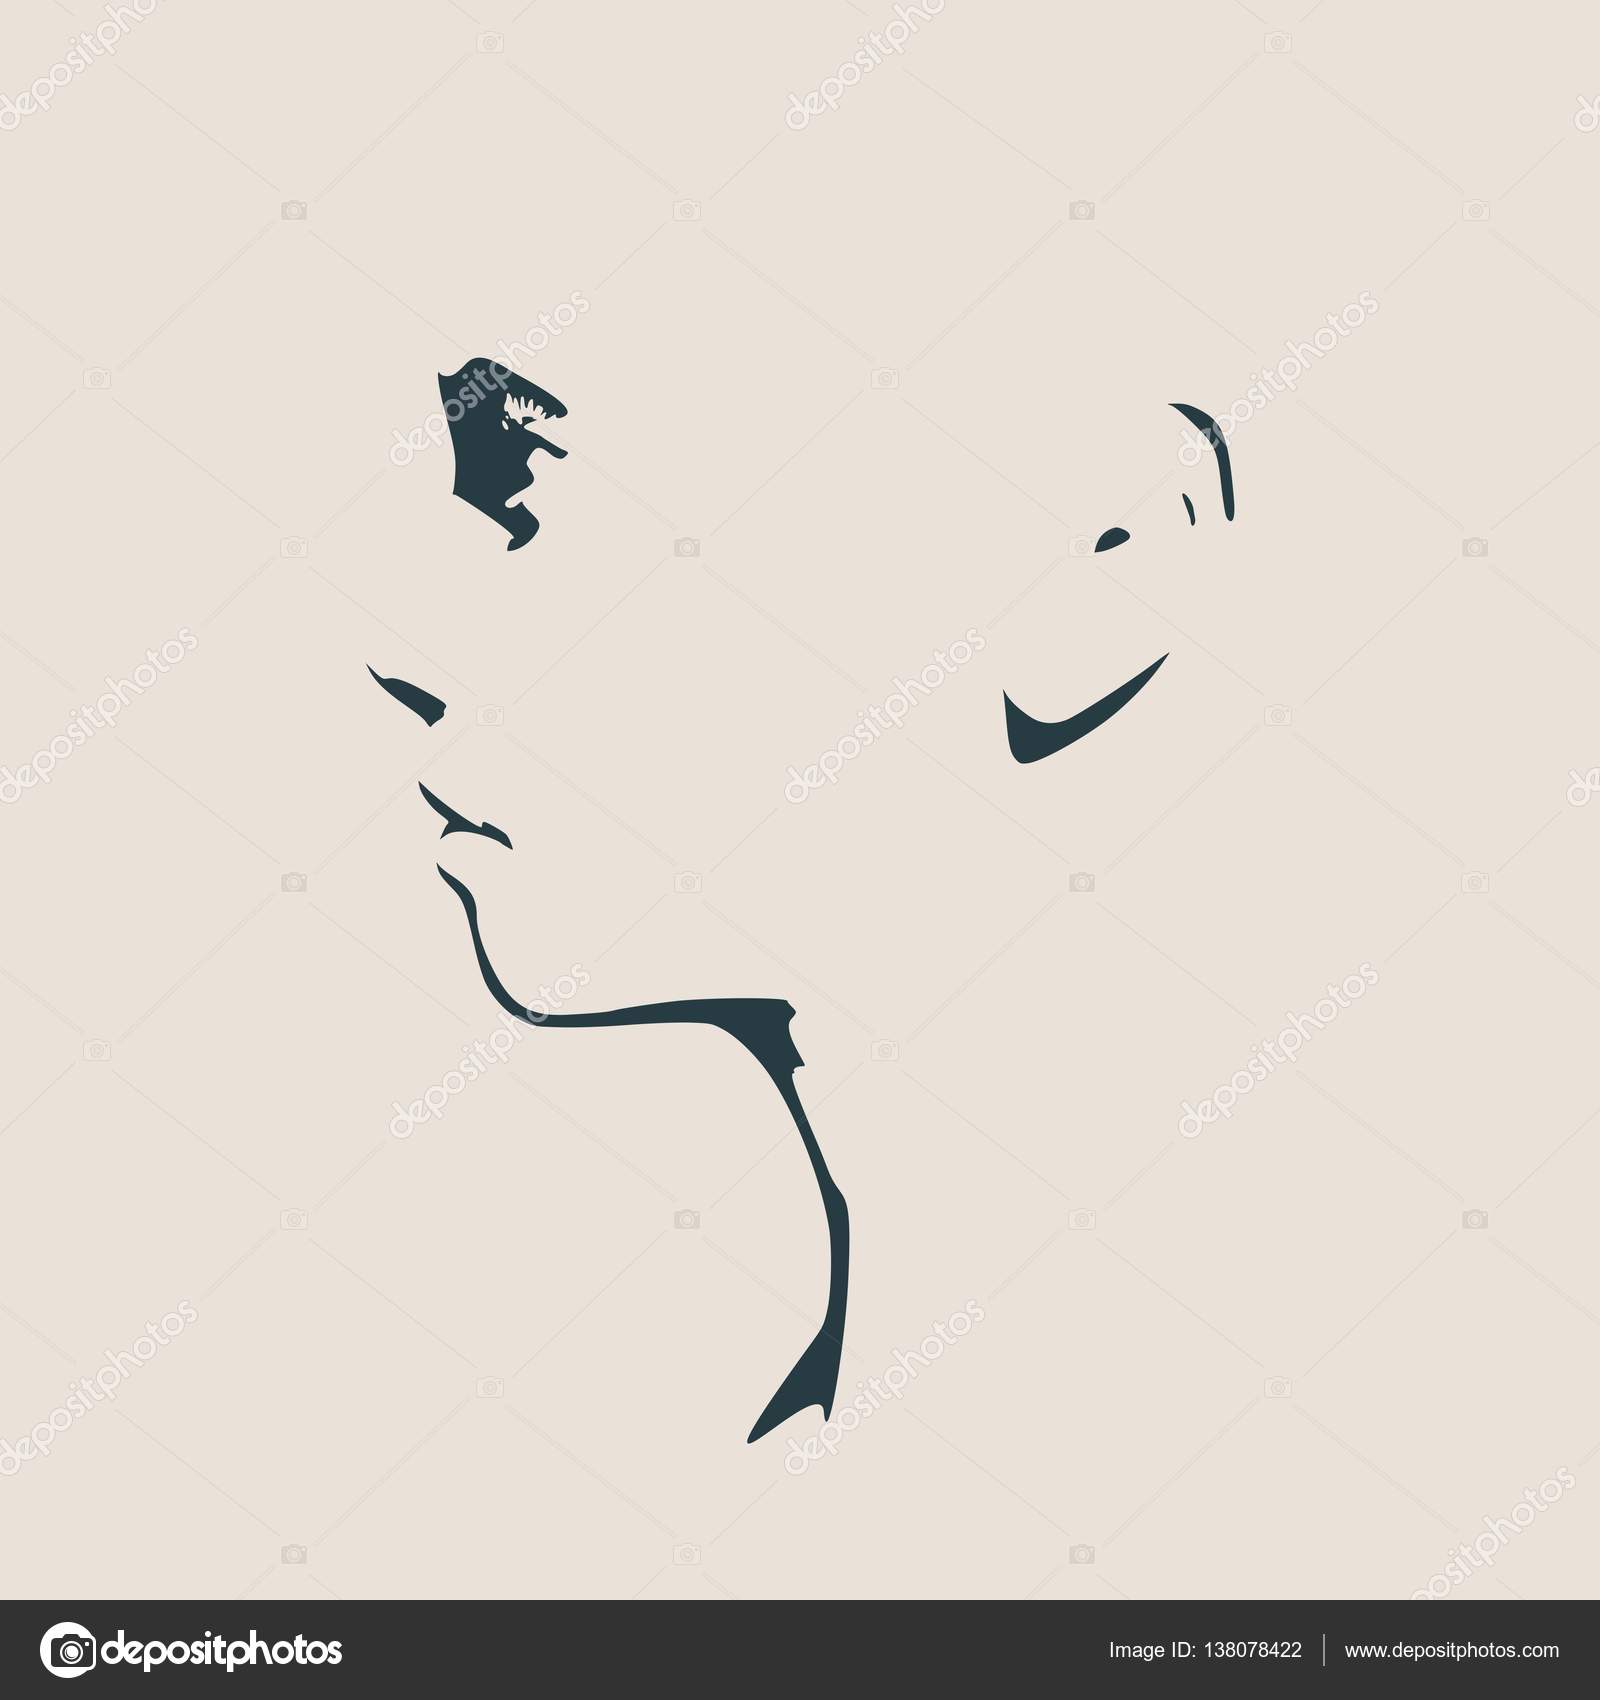 silueta de #perfil de #rostro #cara #face #silhouette #at…